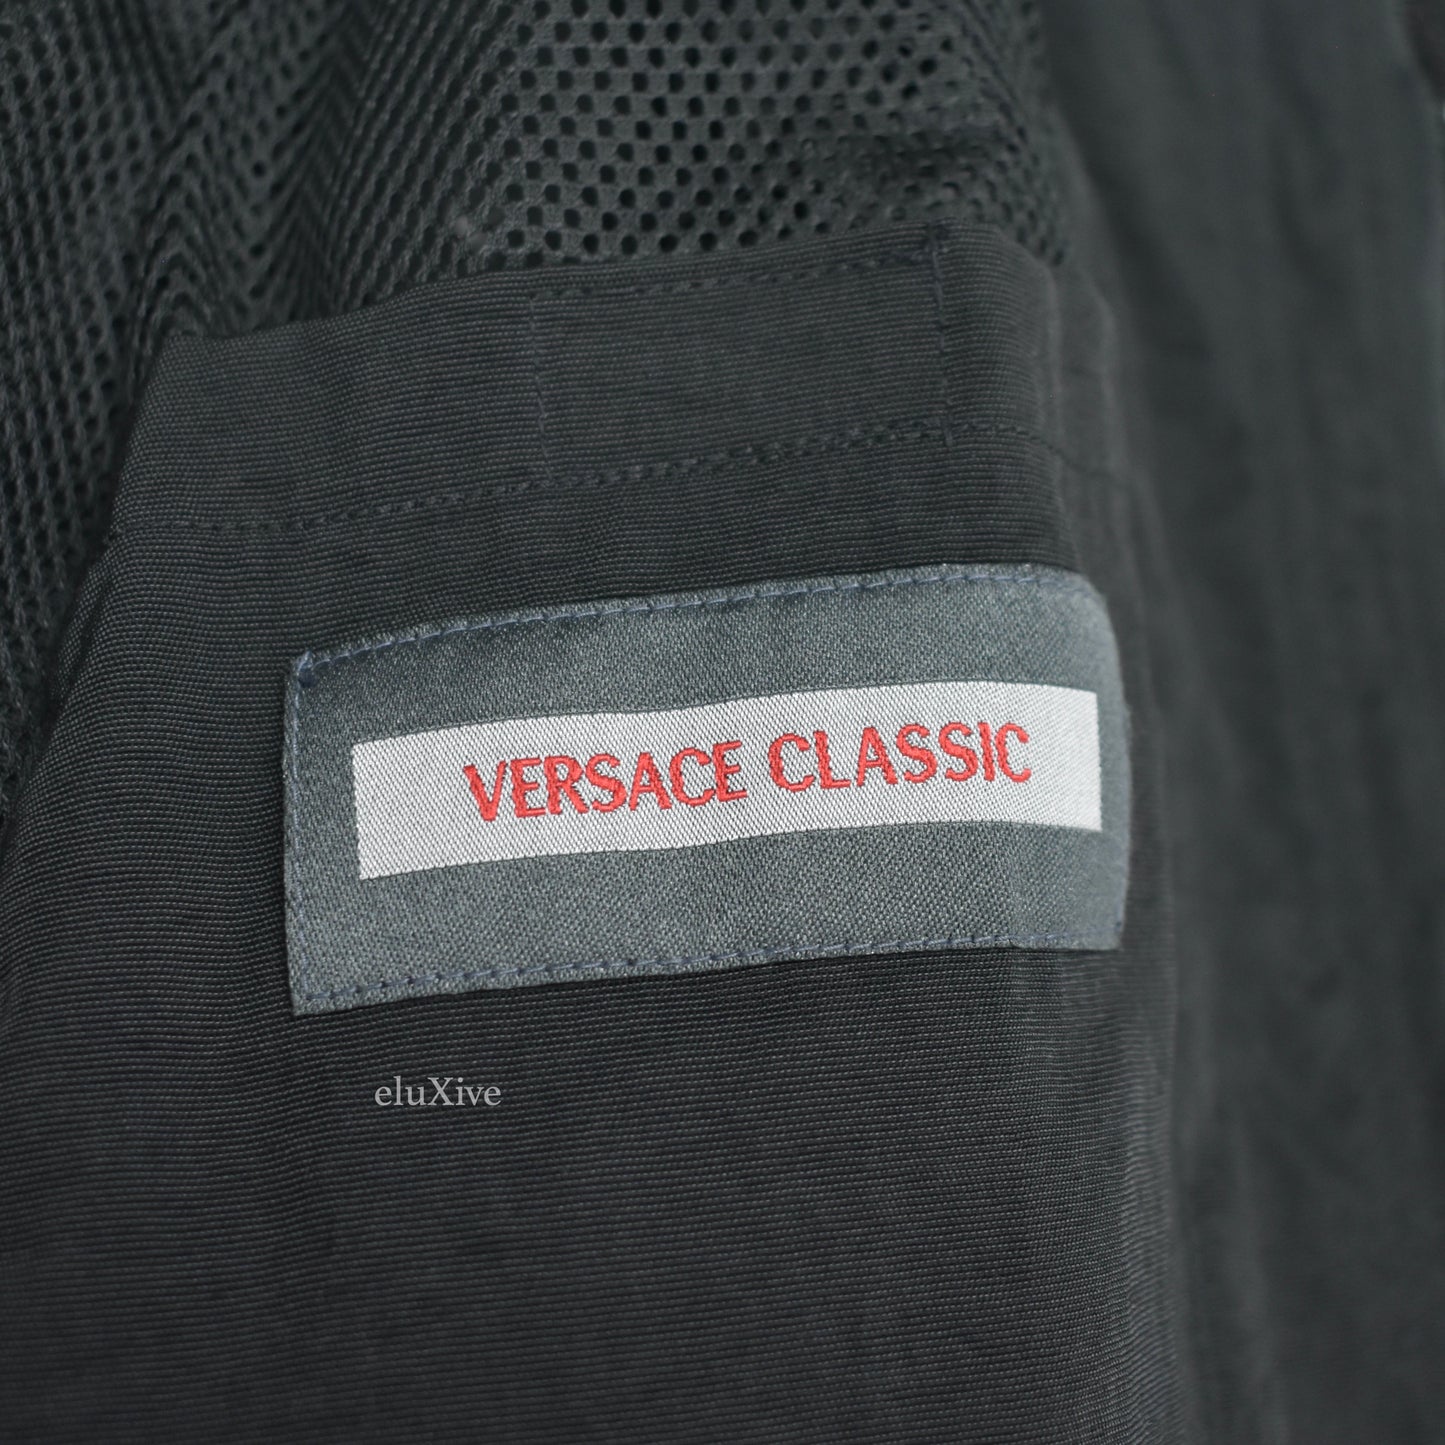 Versace Classic - Black Waterproof Field Jacket